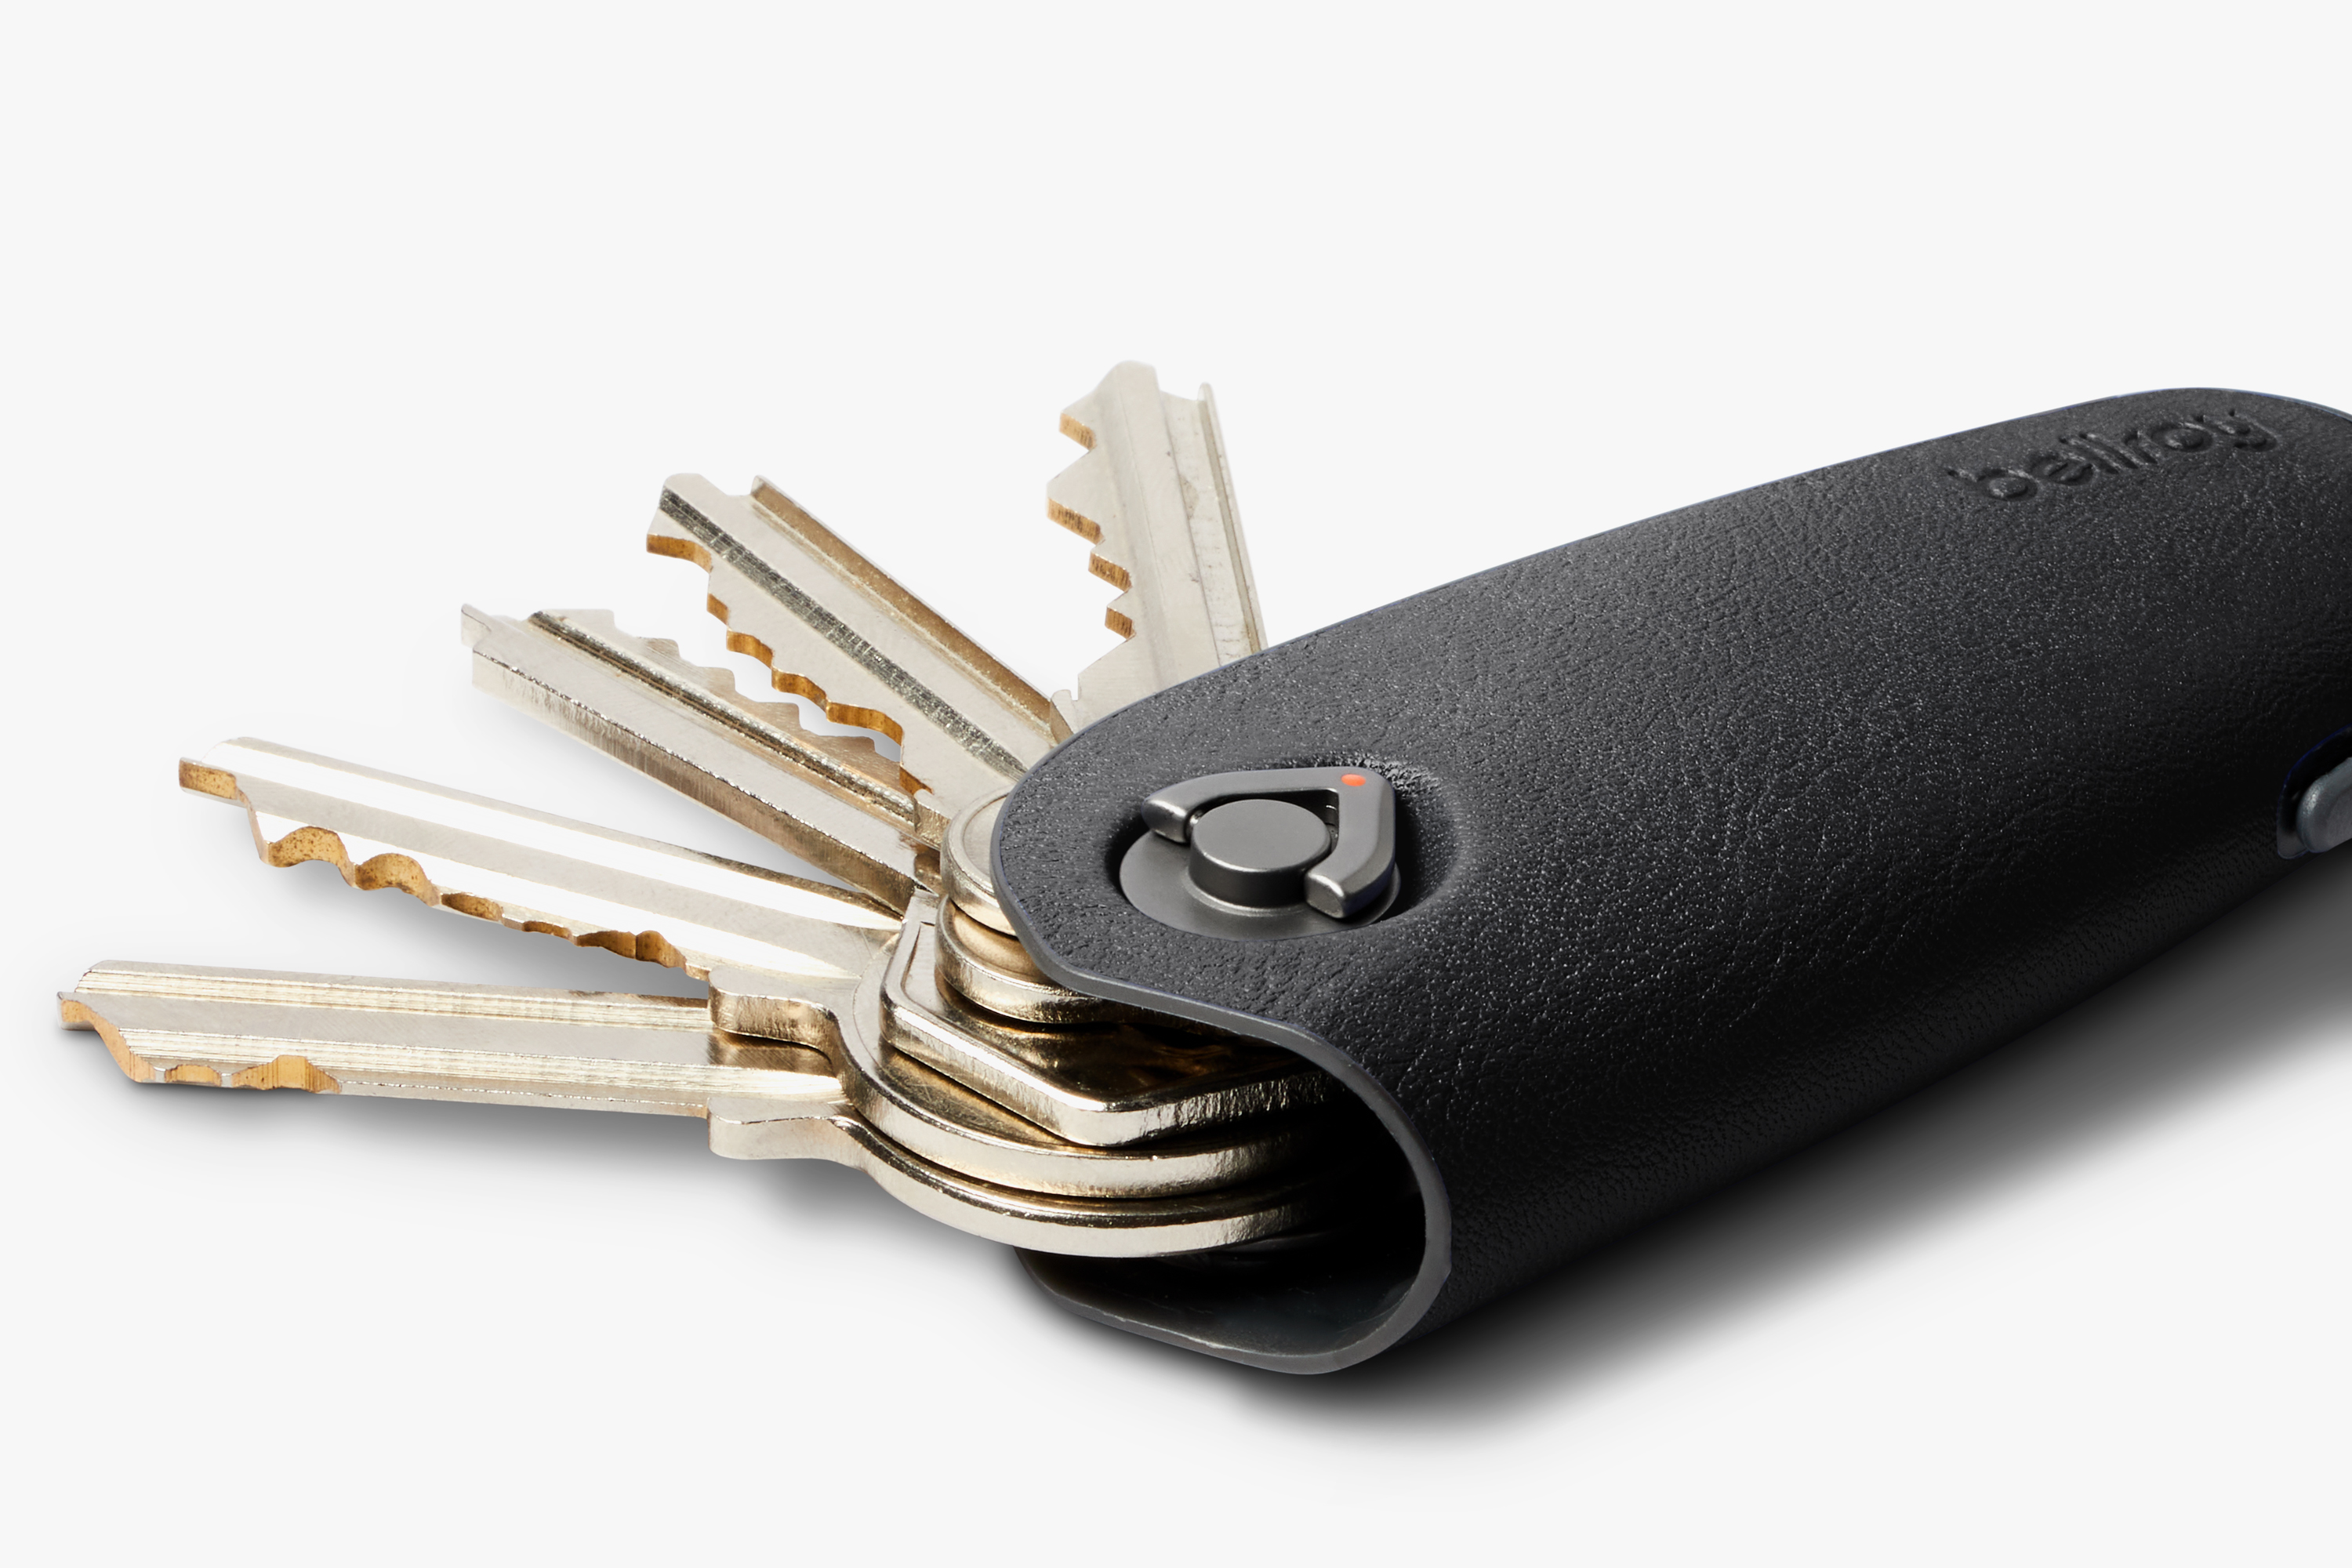 Nano Socket, KeySmart, for premium key holders, pocket organizers, & key  ring solutions.